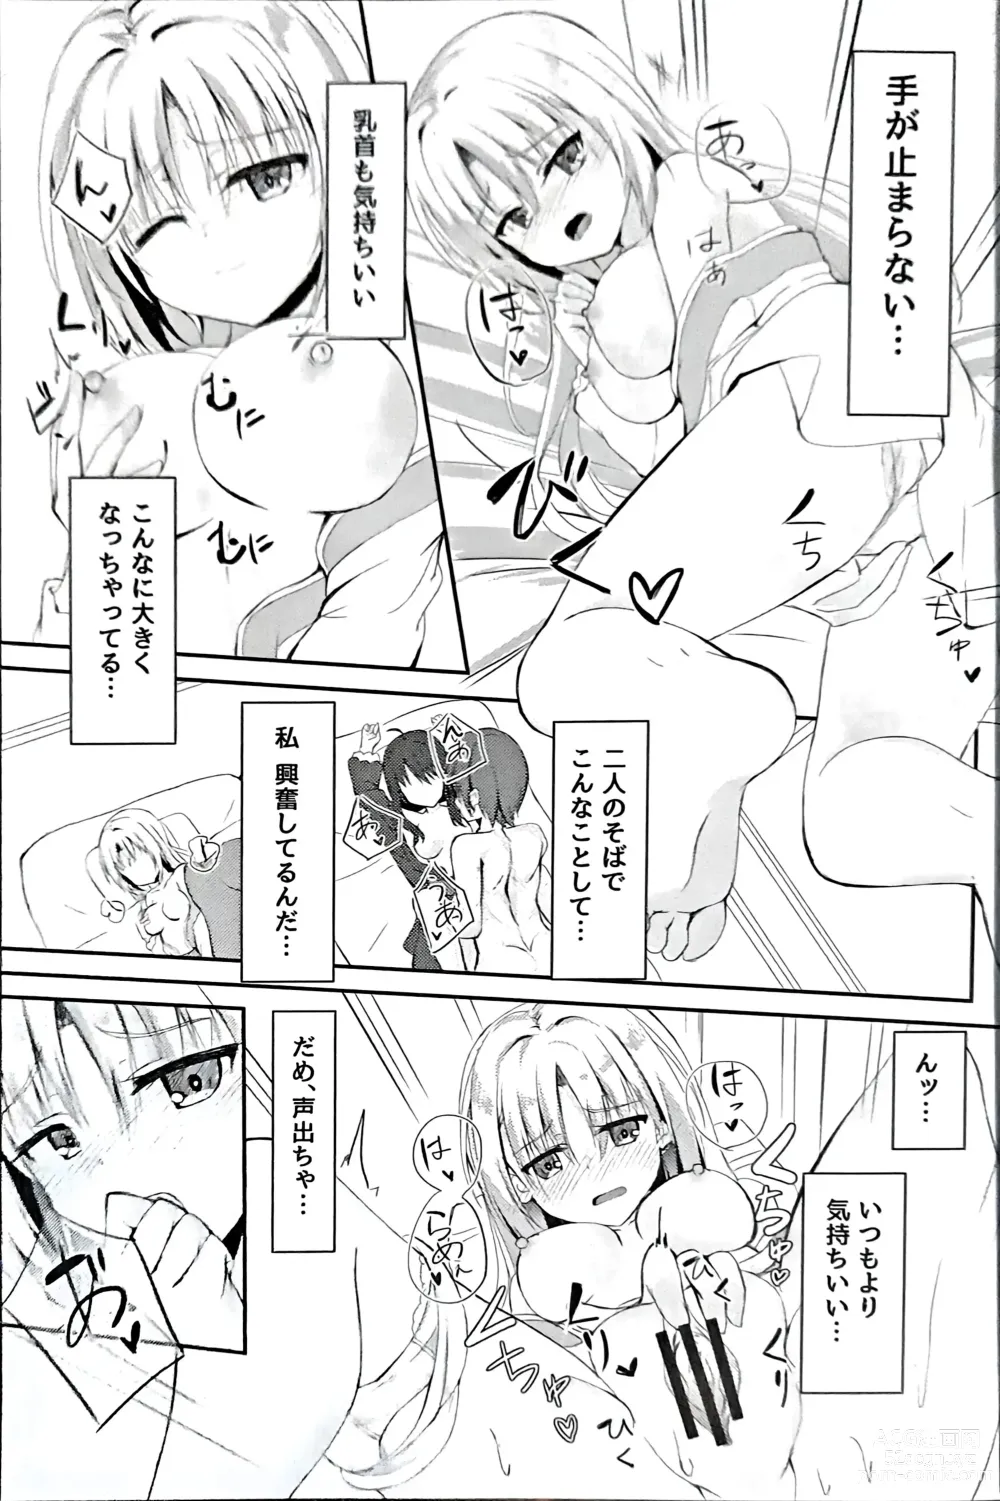 Page 6 of doujinshi にんじゃさんとみこひめさまの悩み